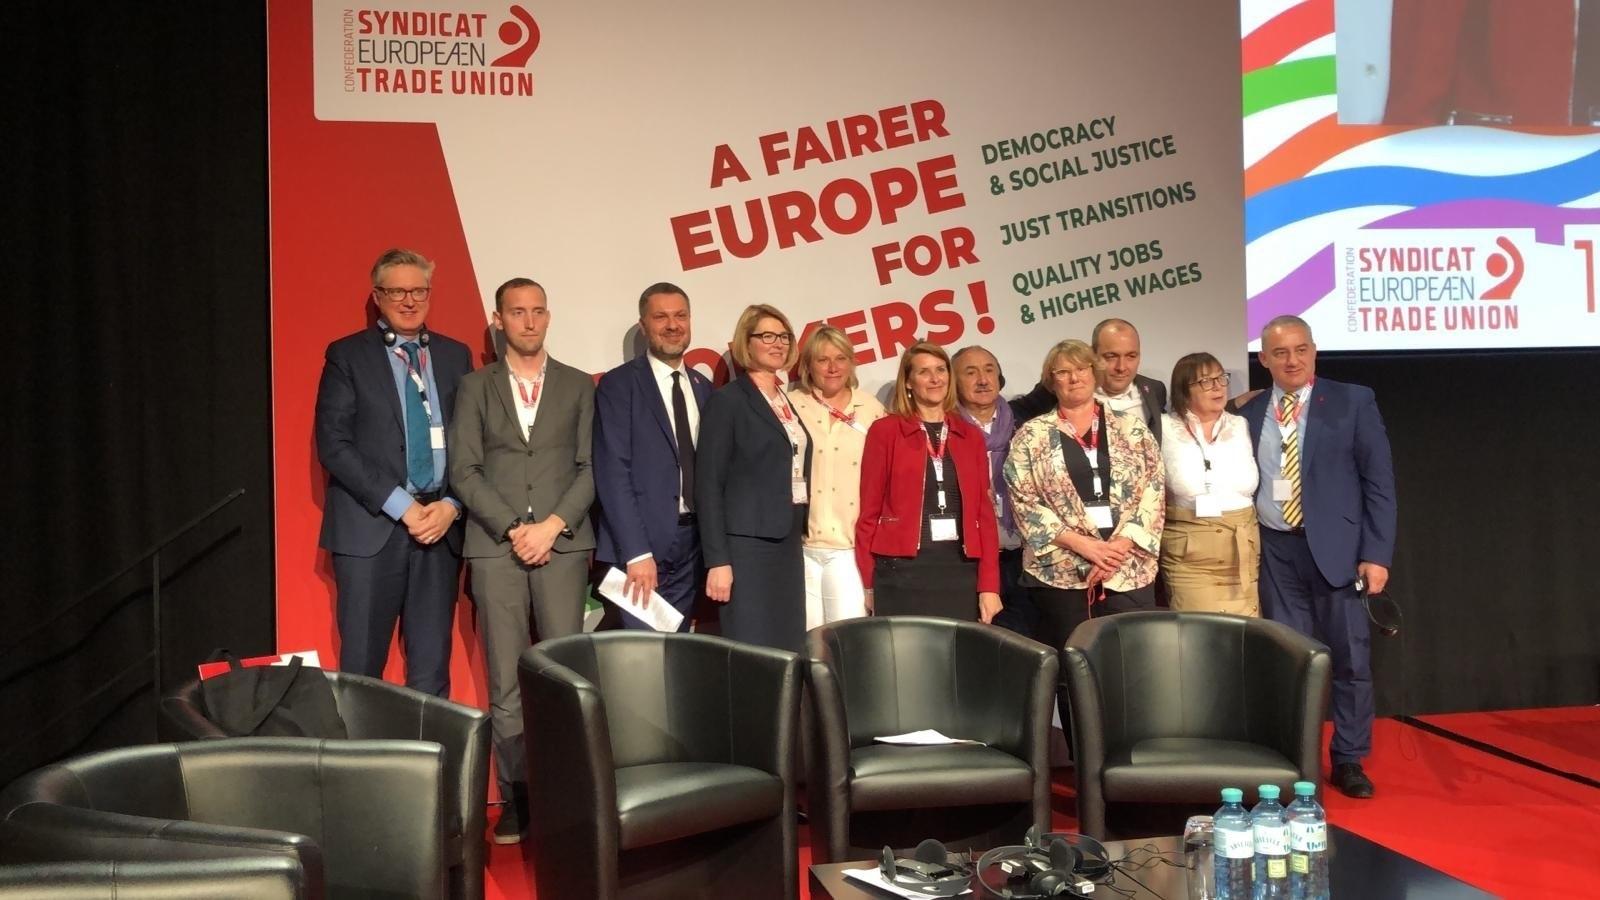 Miembros de la Confederación Europea de Sindicatos - Europa Press